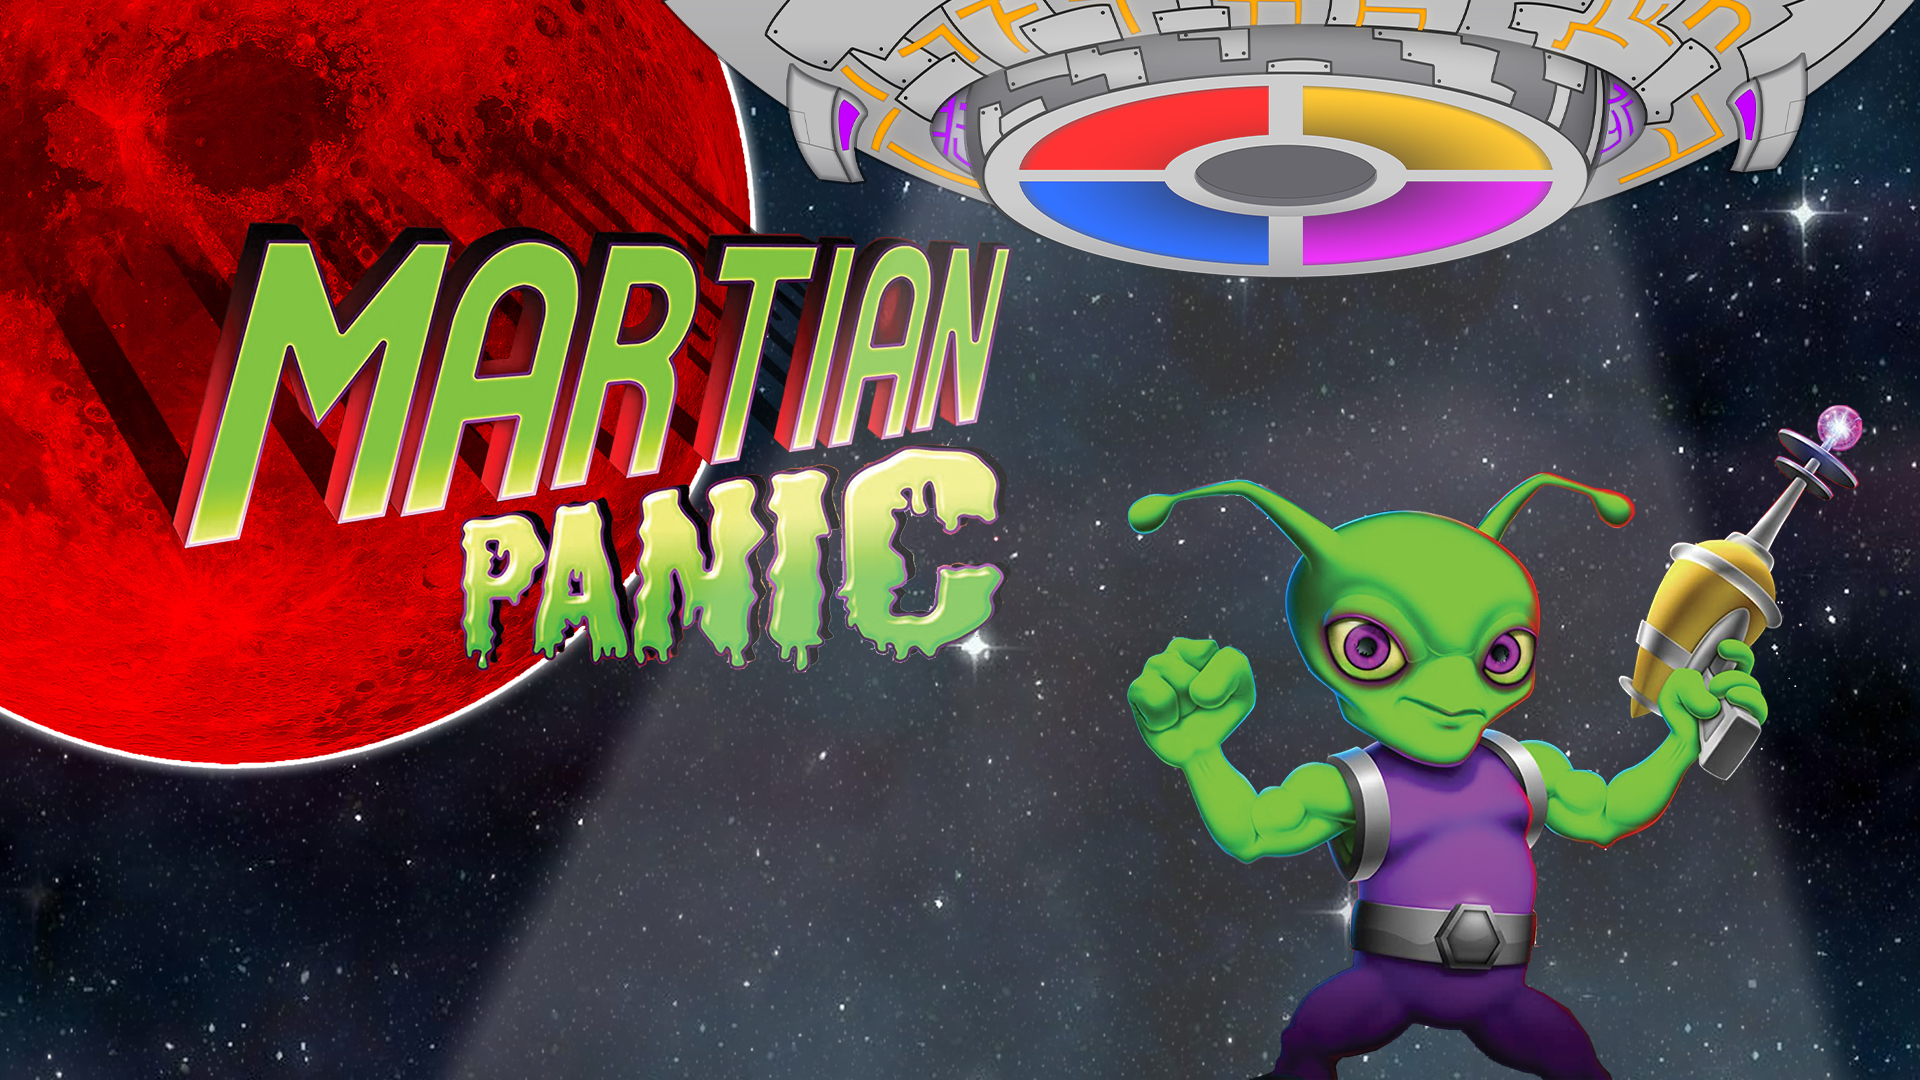 Martian Panic